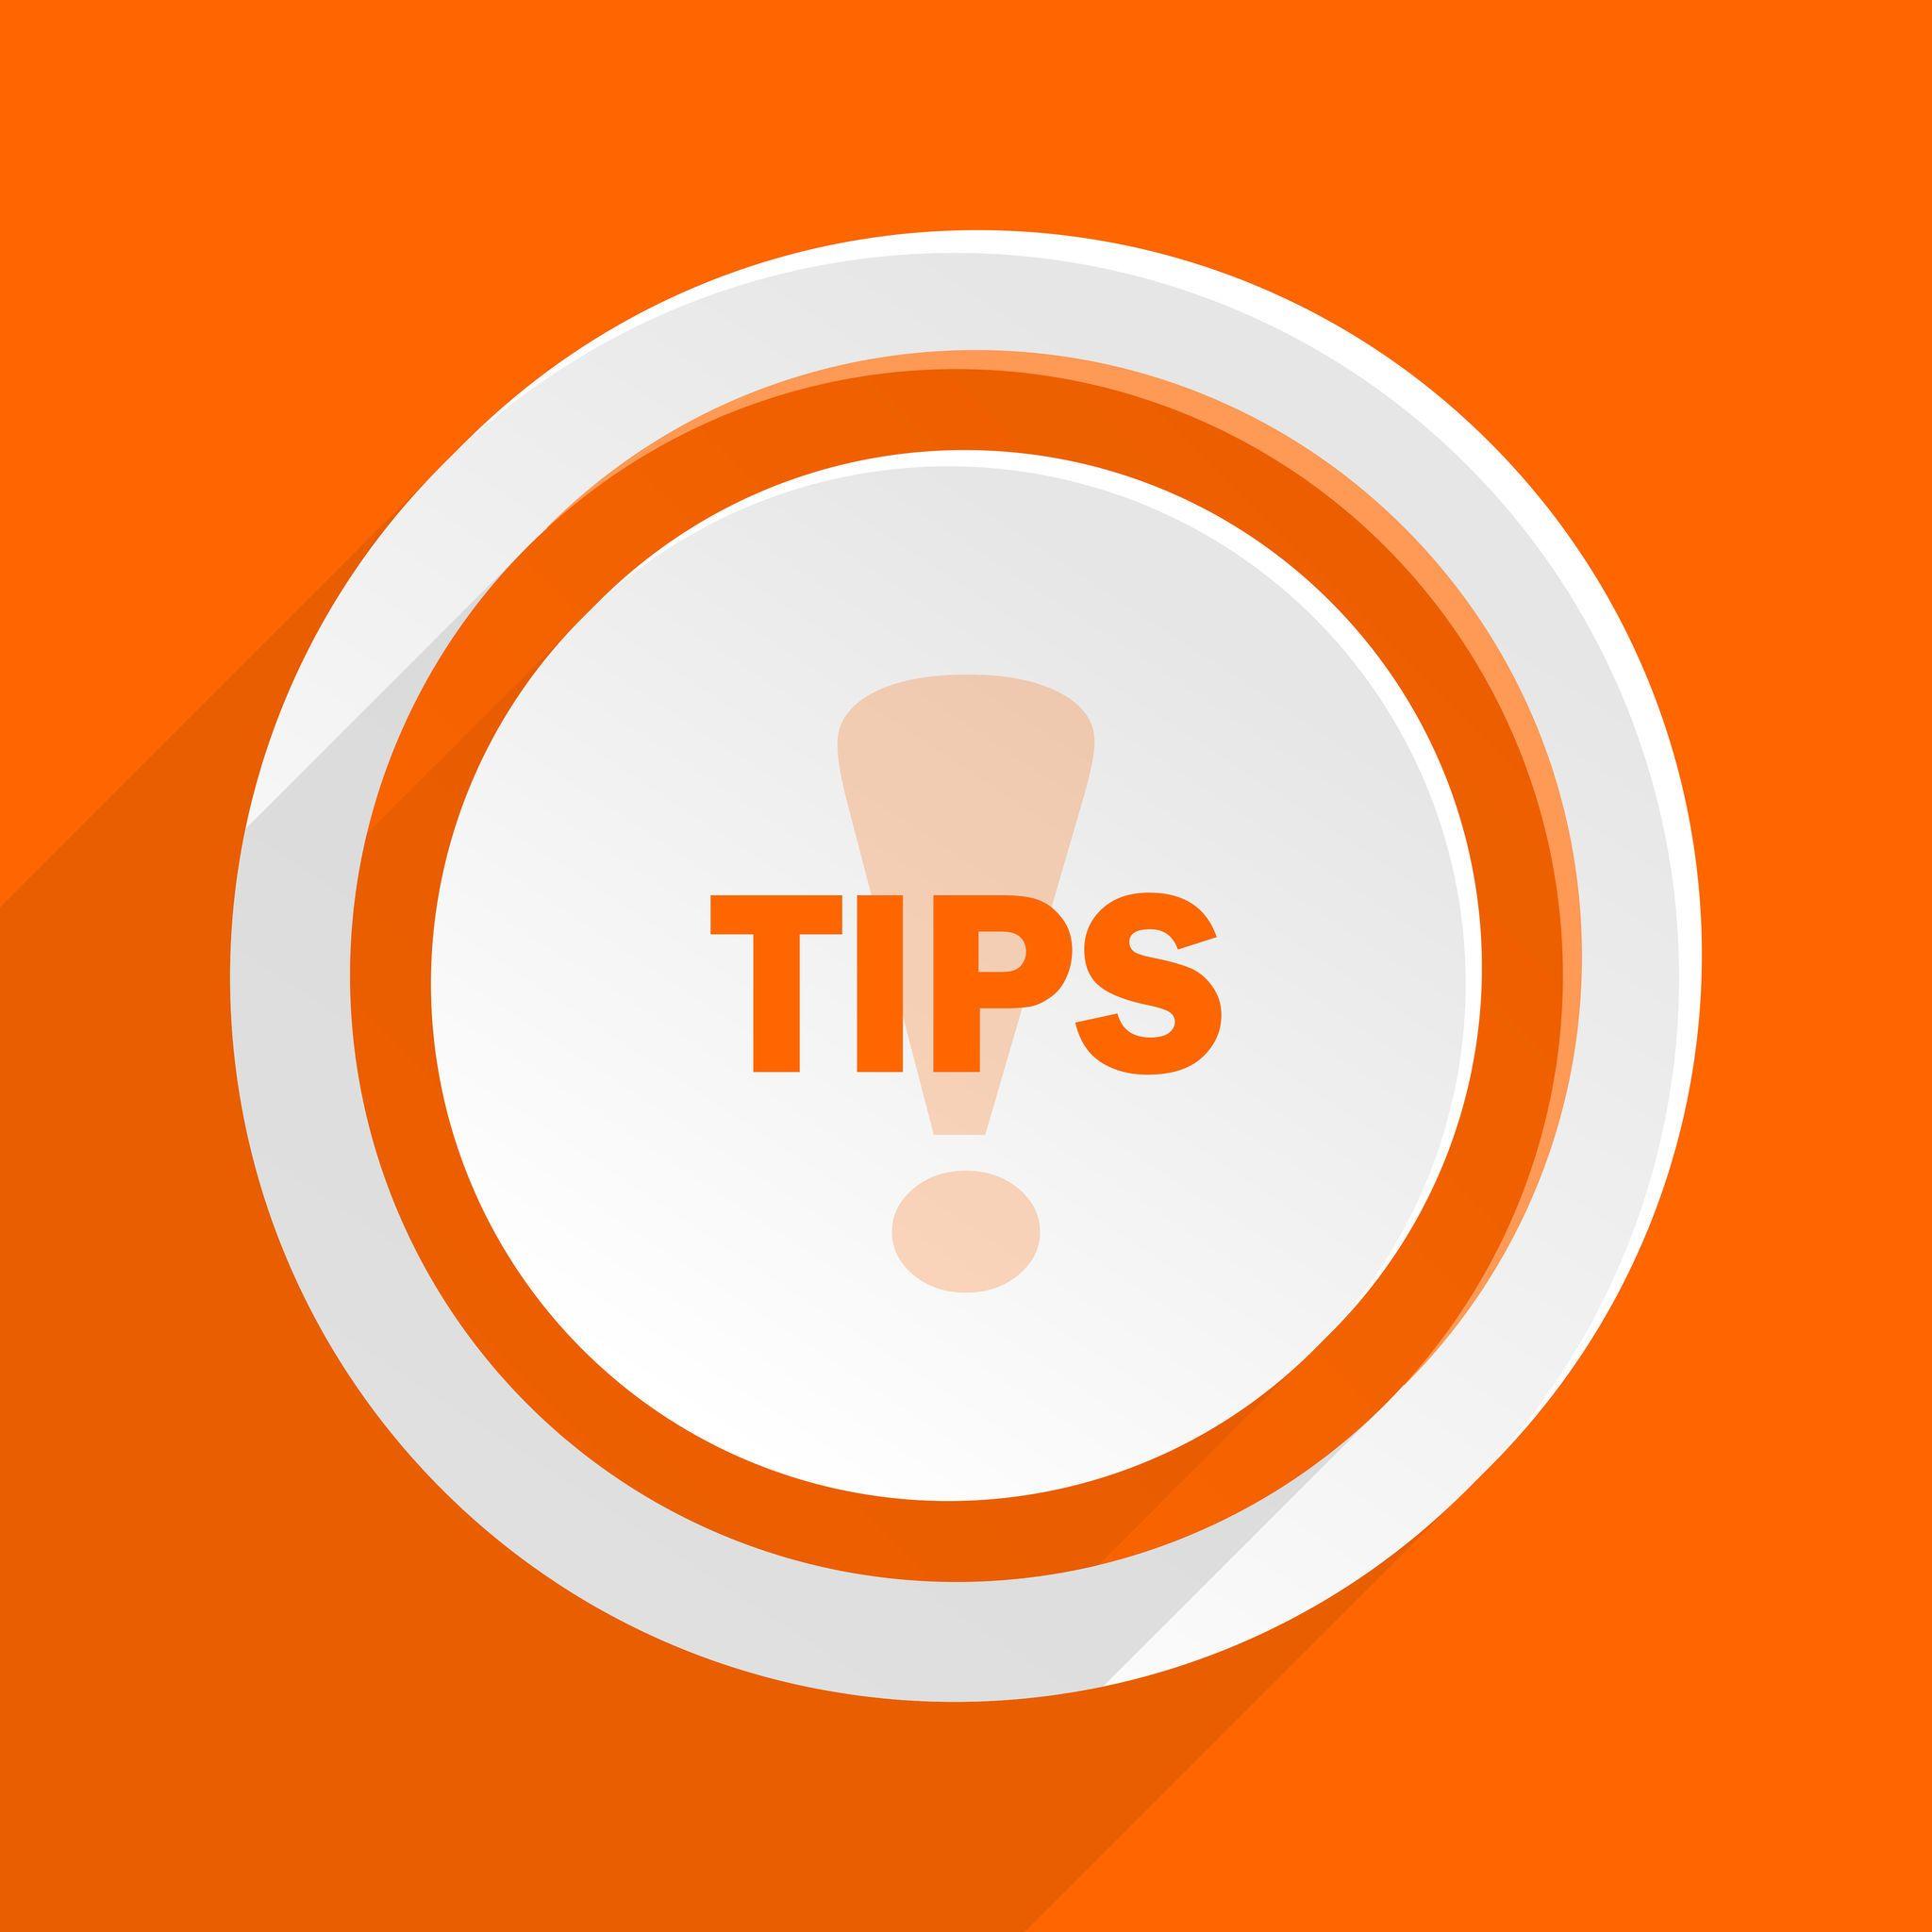 Tips App Logo - 50235311 - tips orange flat design modern icon for web and mobile ...